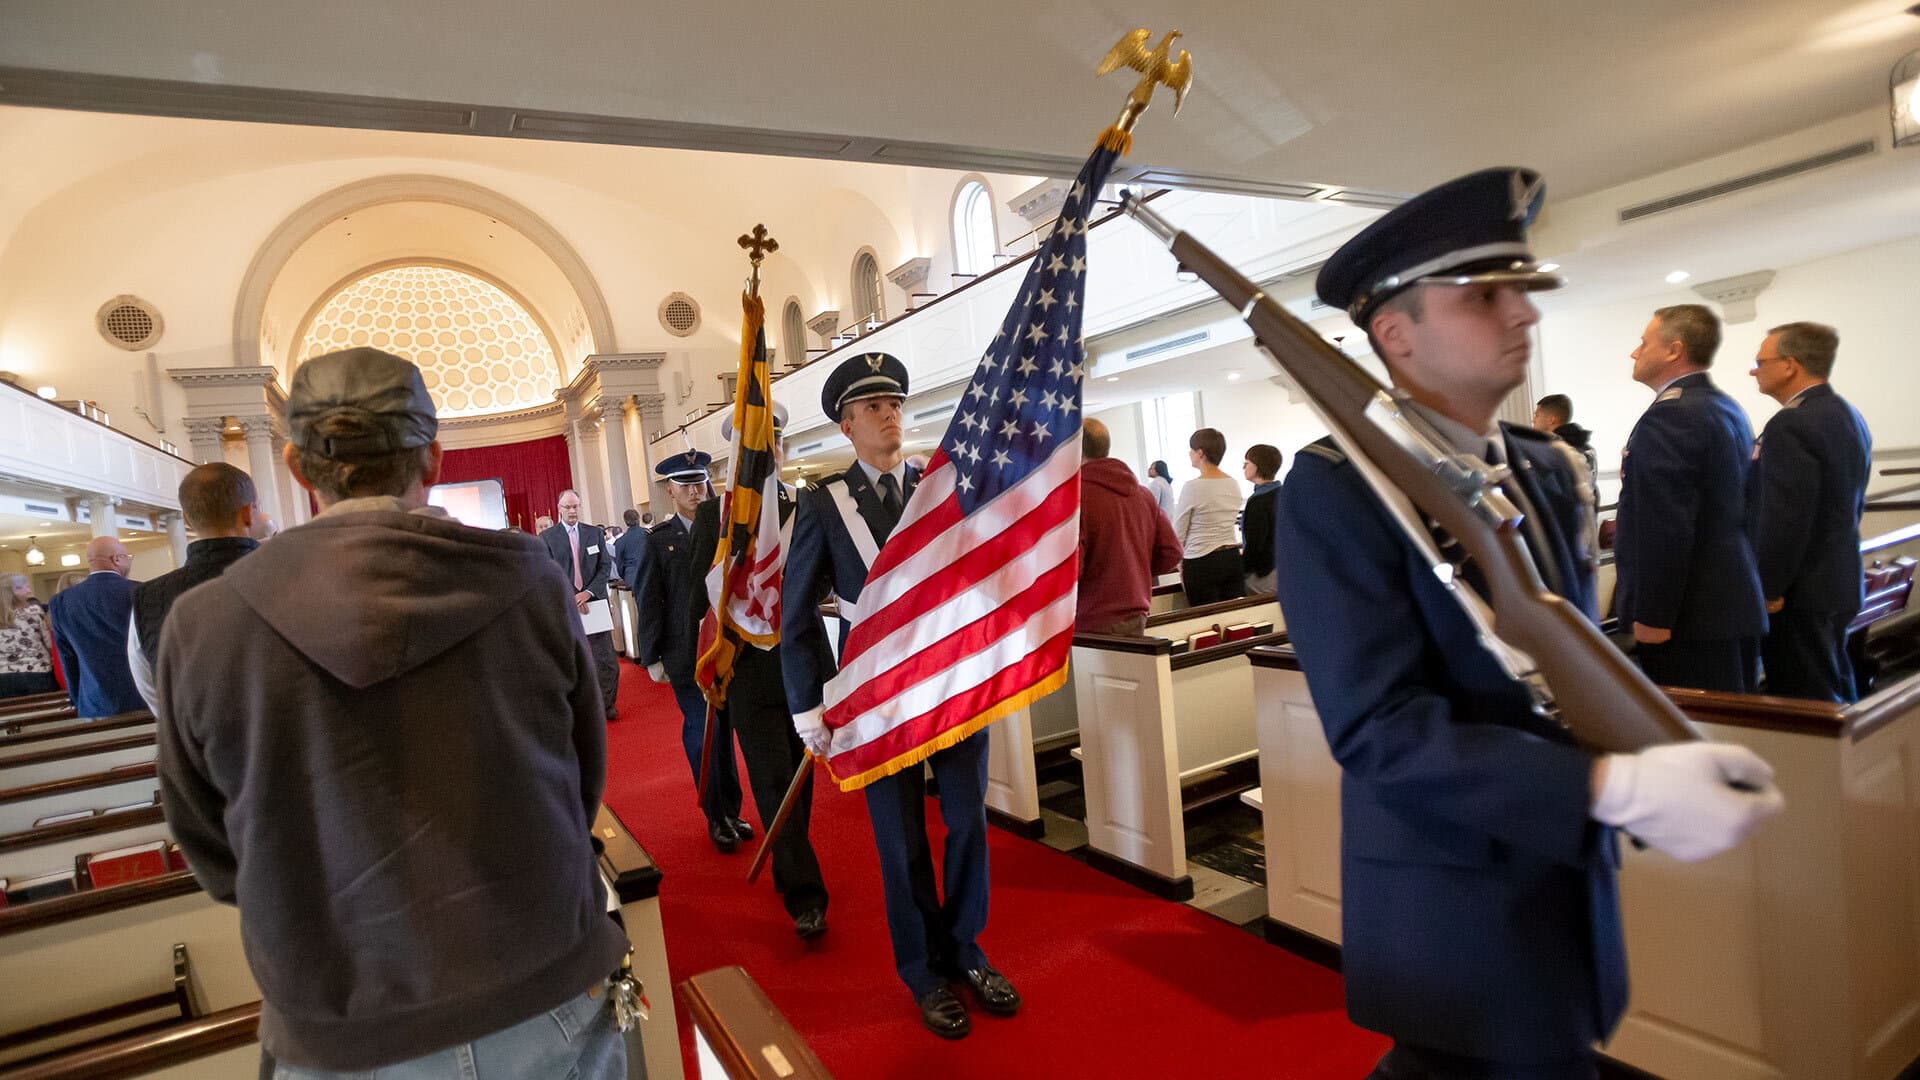 Veterans Day service at Memorial Chapel